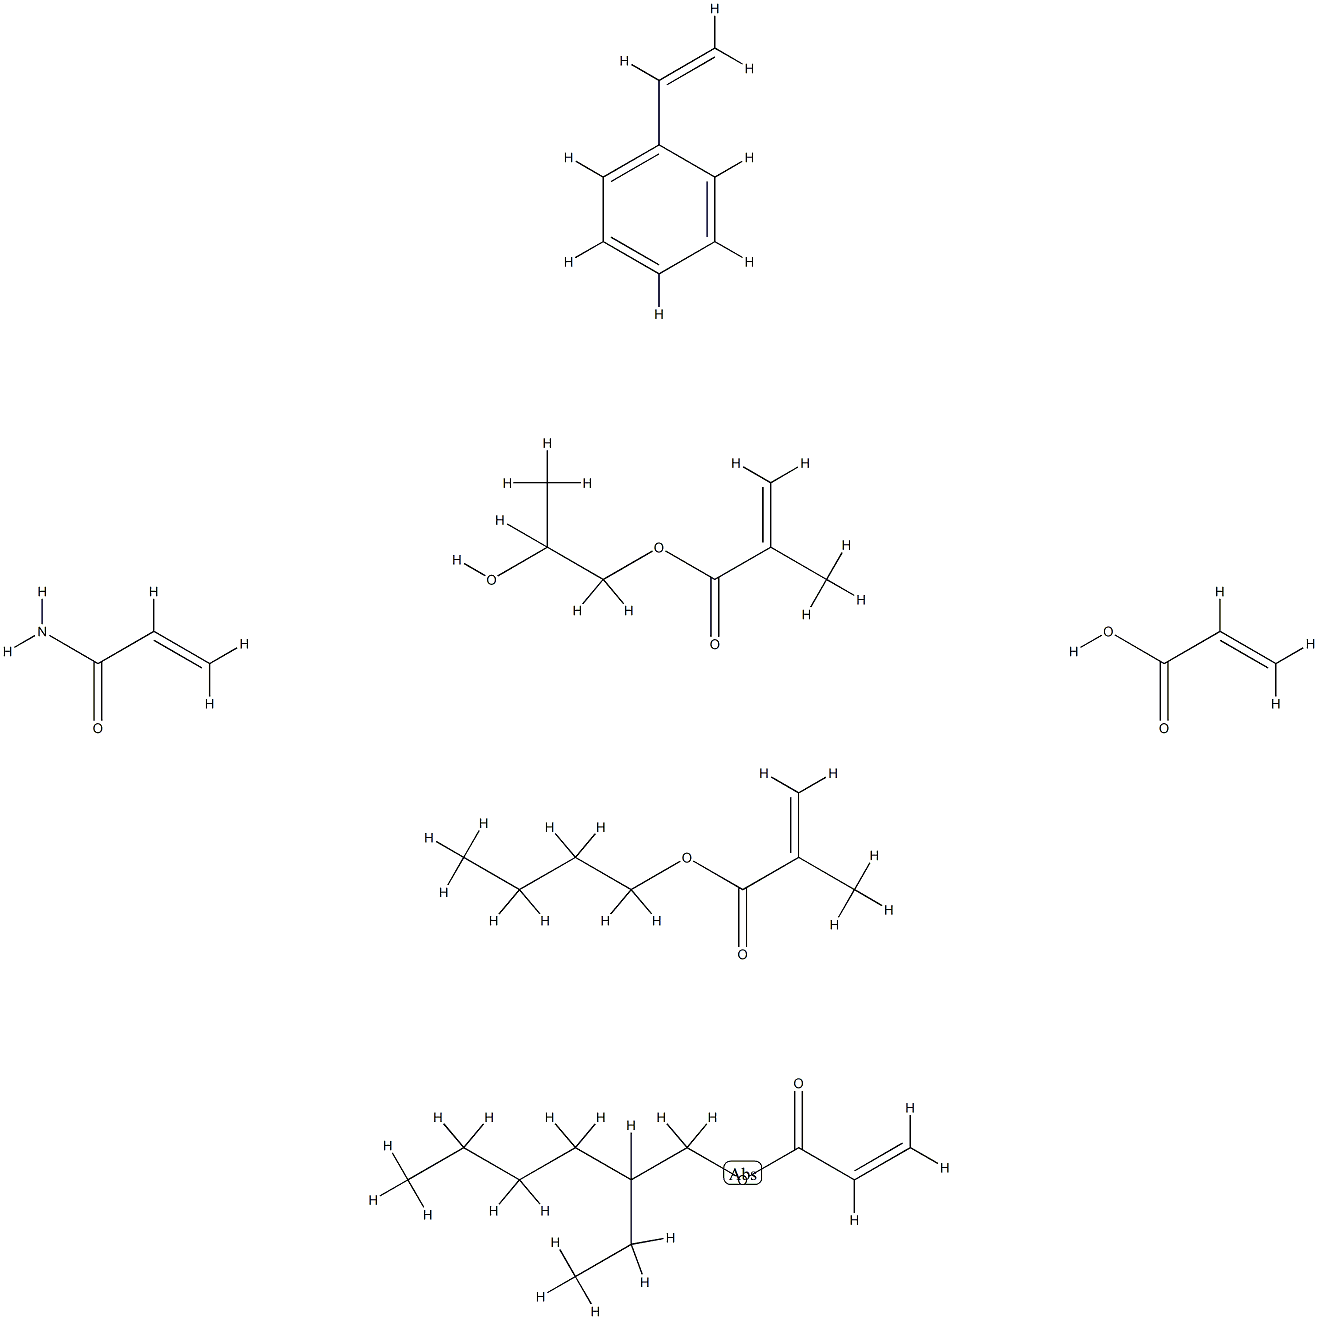 2-Propenoic acid, 2-methyl-, butyl ester, polymer with ethenylbenzene, 2-ethylhexyl 2-propenoate, 1,2-propanediol mono(2-methyl-2-propenoate), 2-propenamide and 2-propenoic acid|